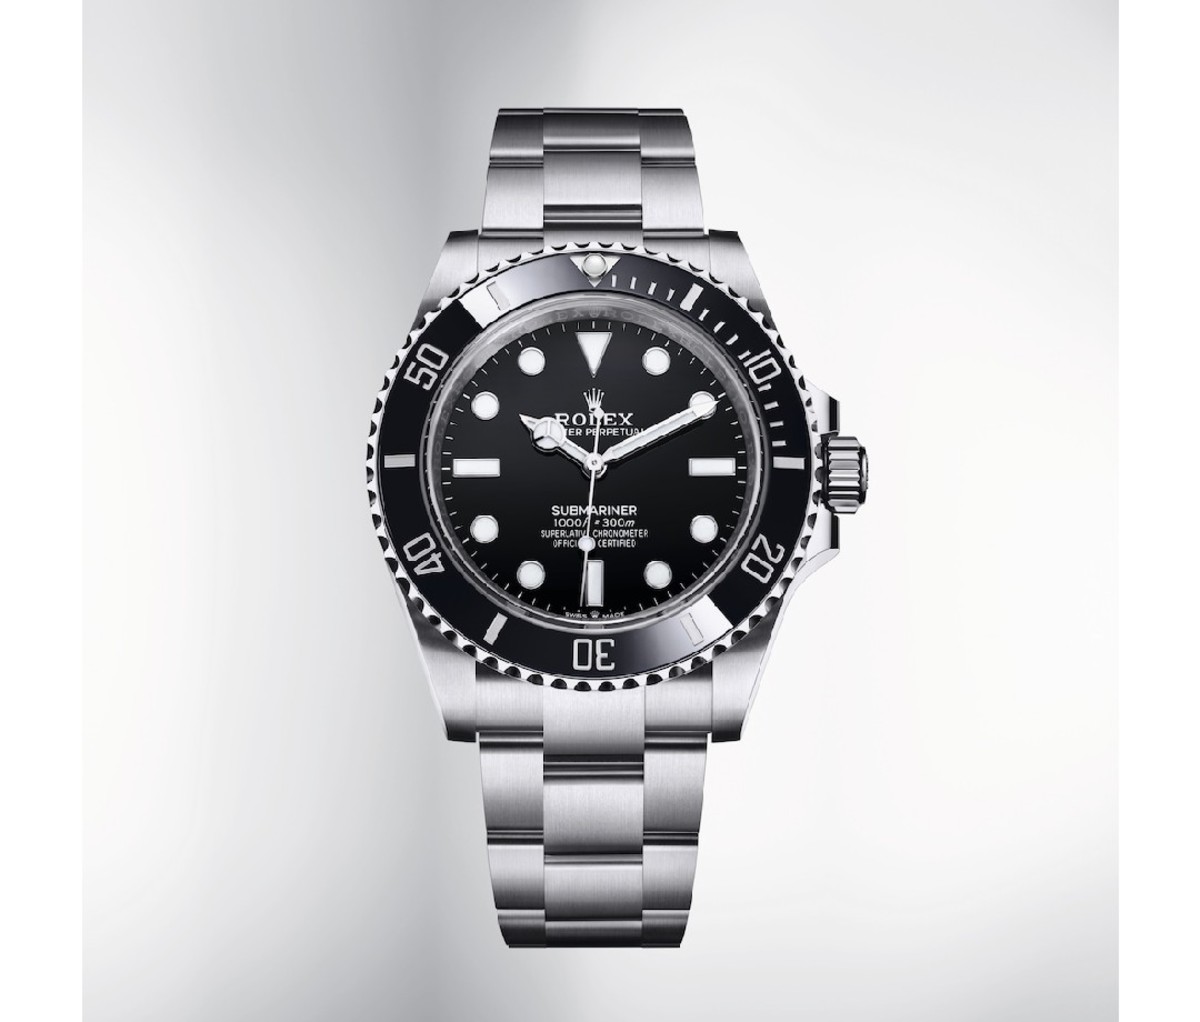 Closeup of Rolex Submariner watch